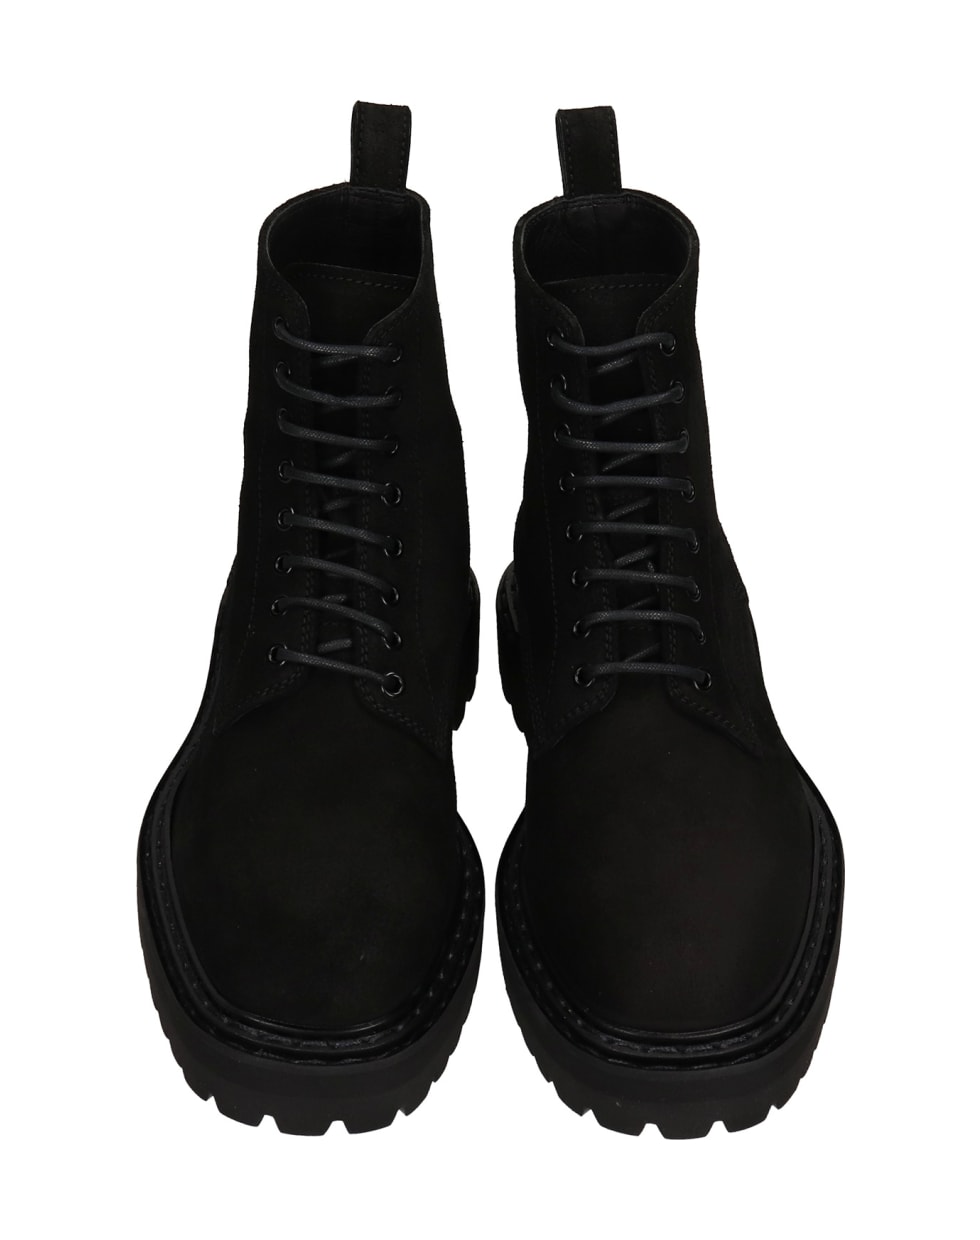 Officine Creative Pistols 002 Combat Boots In Black Suede - black